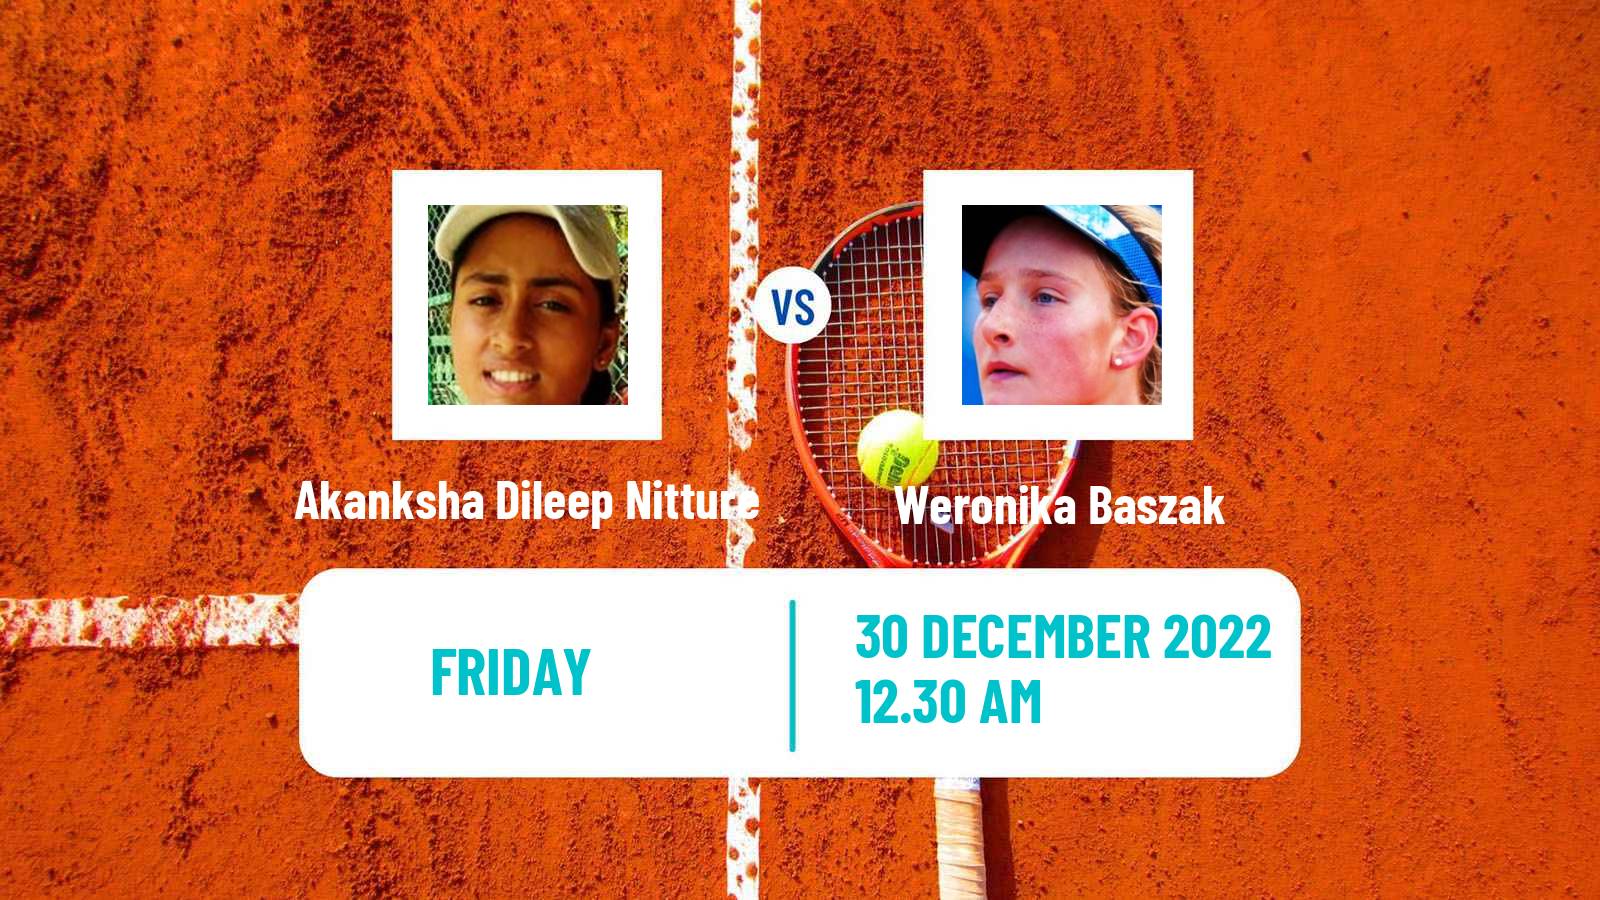 Tennis ITF Tournaments Akanksha Dileep Nitture - Weronika Baszak